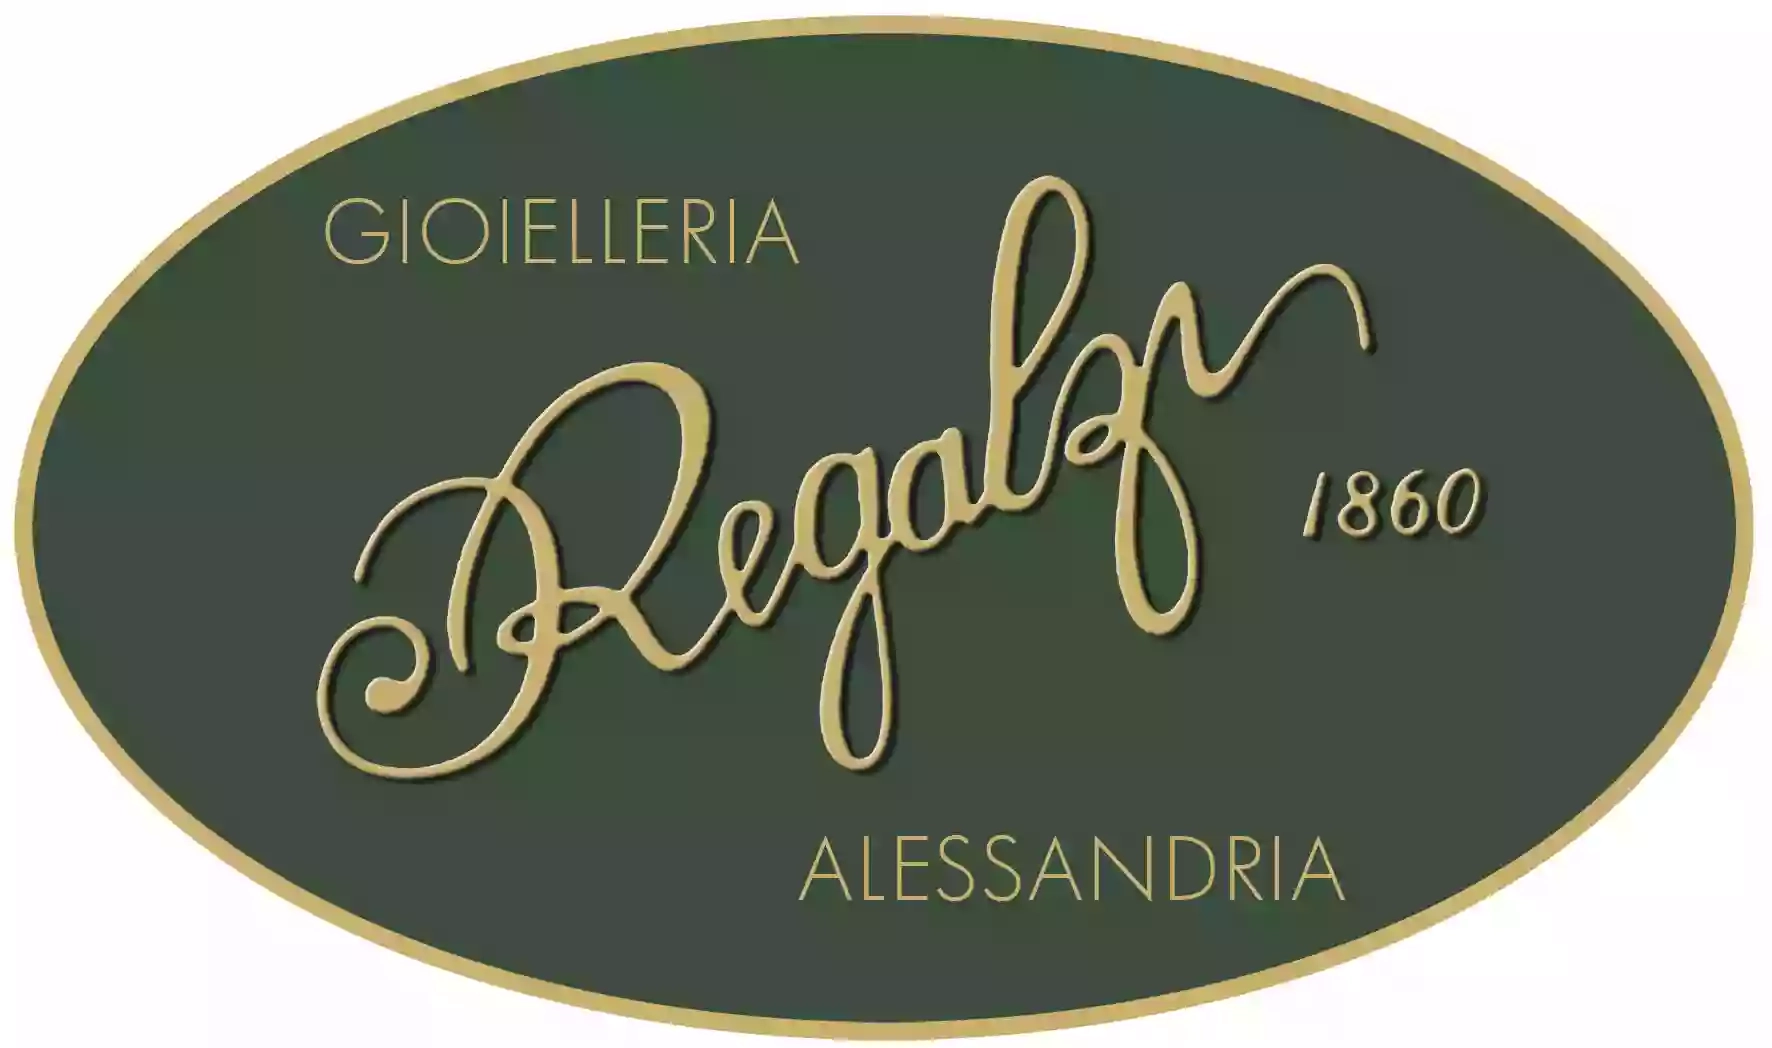 Gioielleria Regalzi 1860